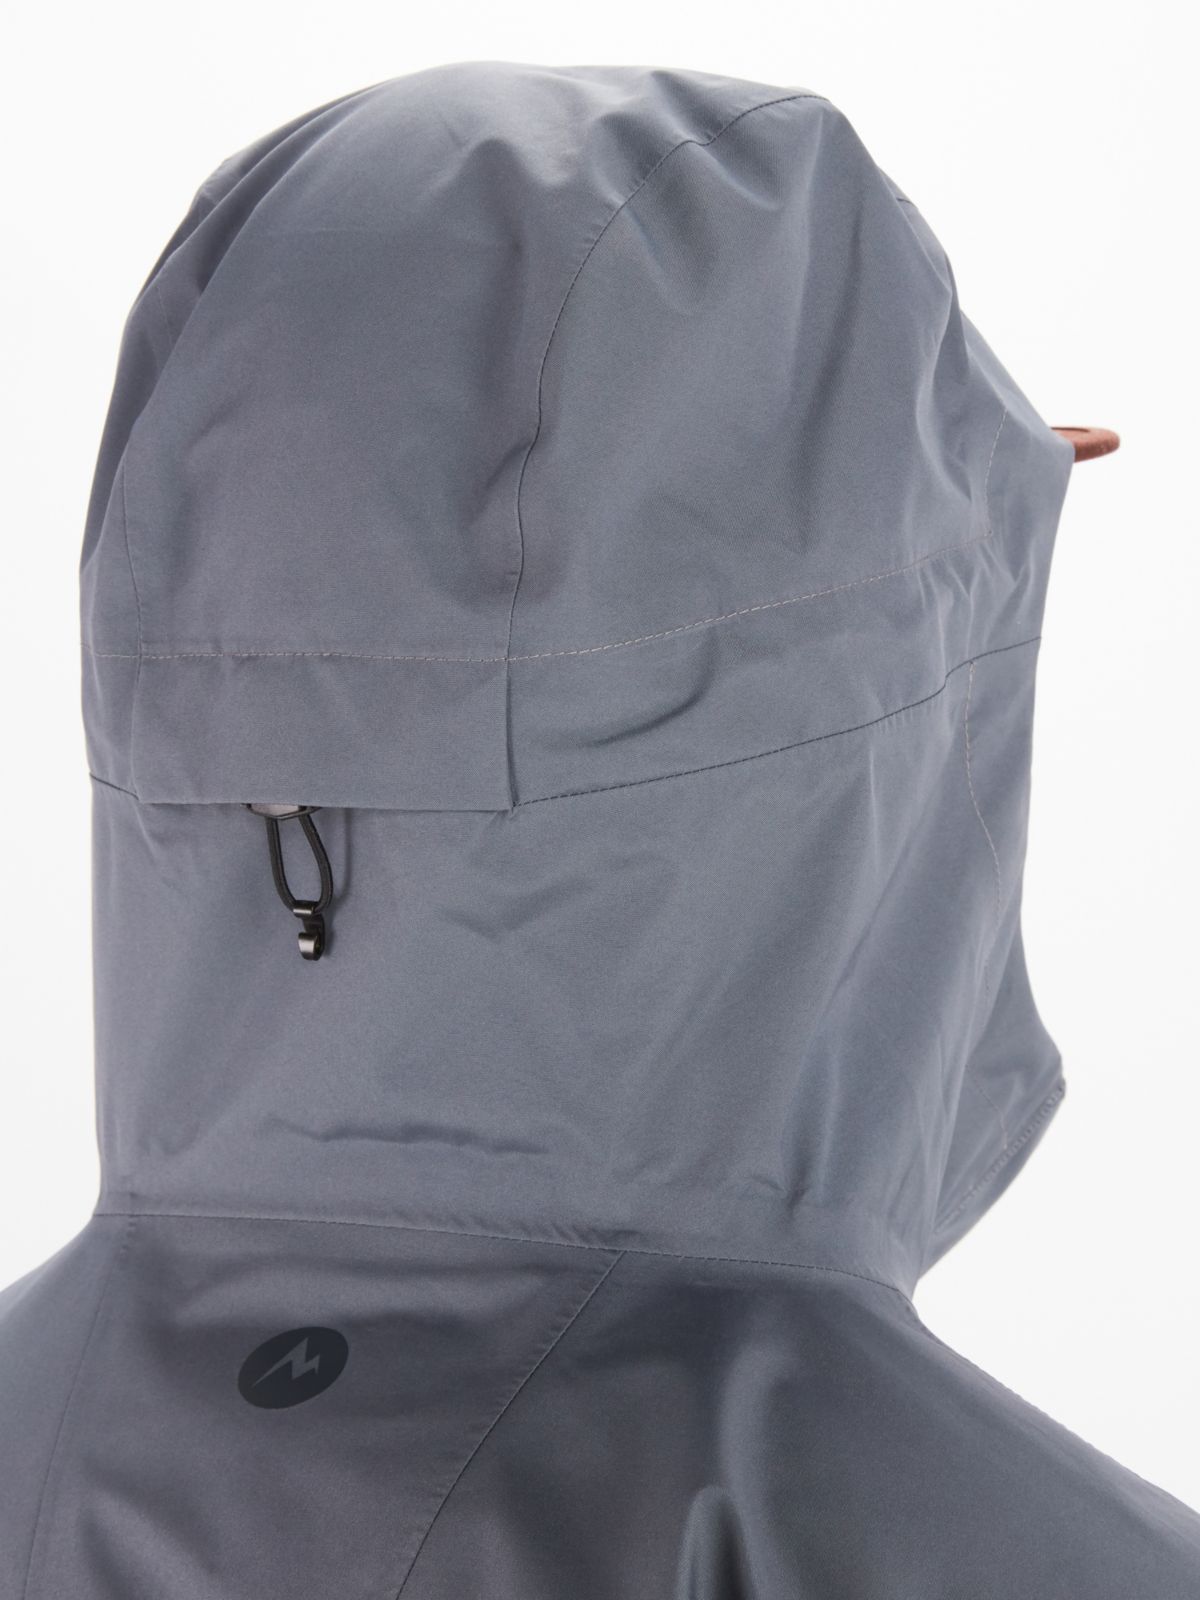 the hood of men's rainwear jacket